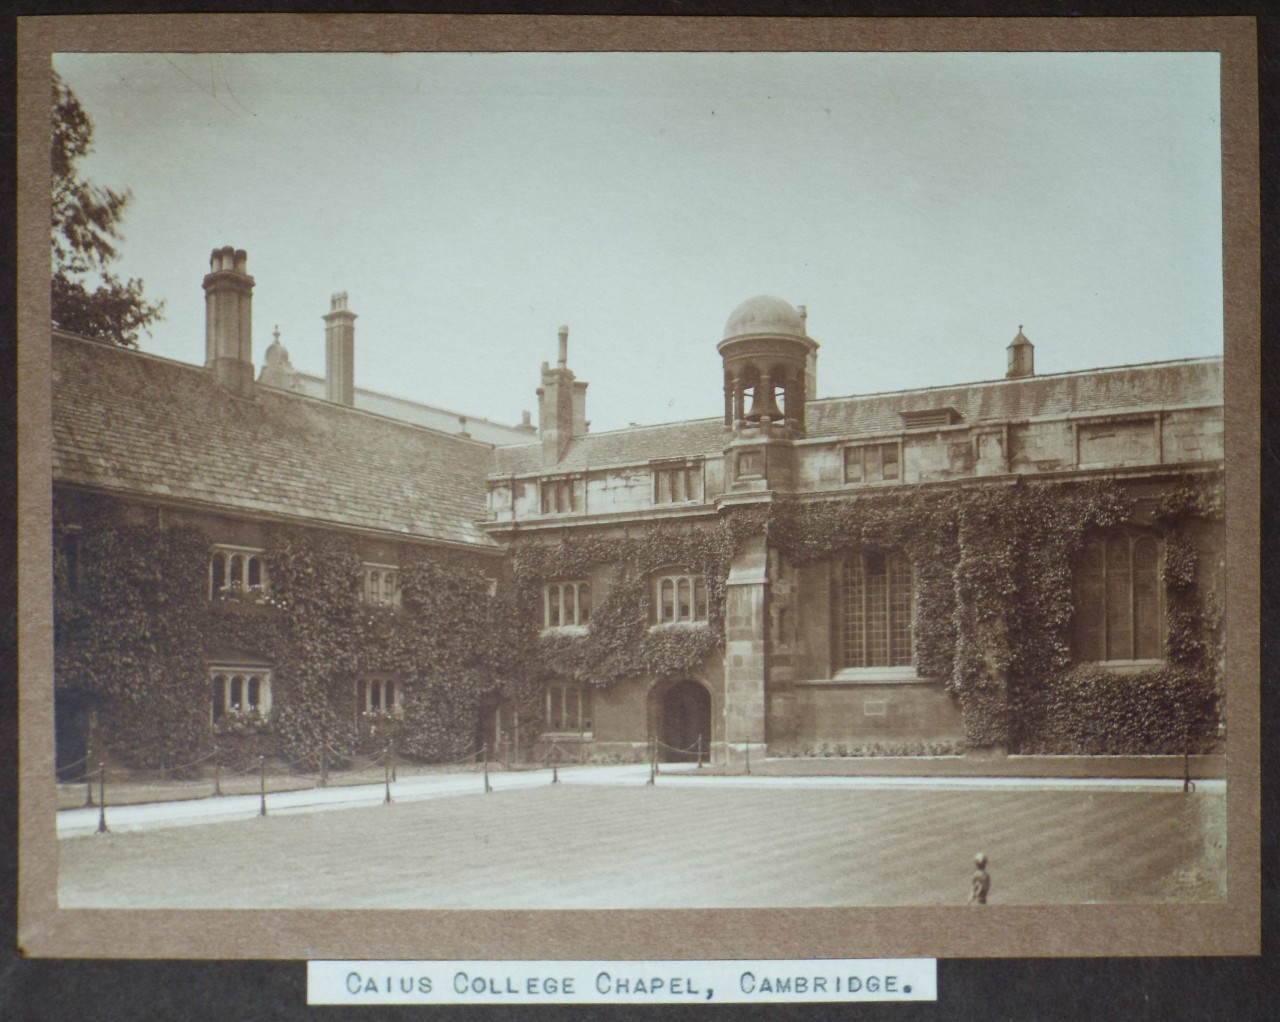 Photograph - Caius College Chapel, Cambridge.